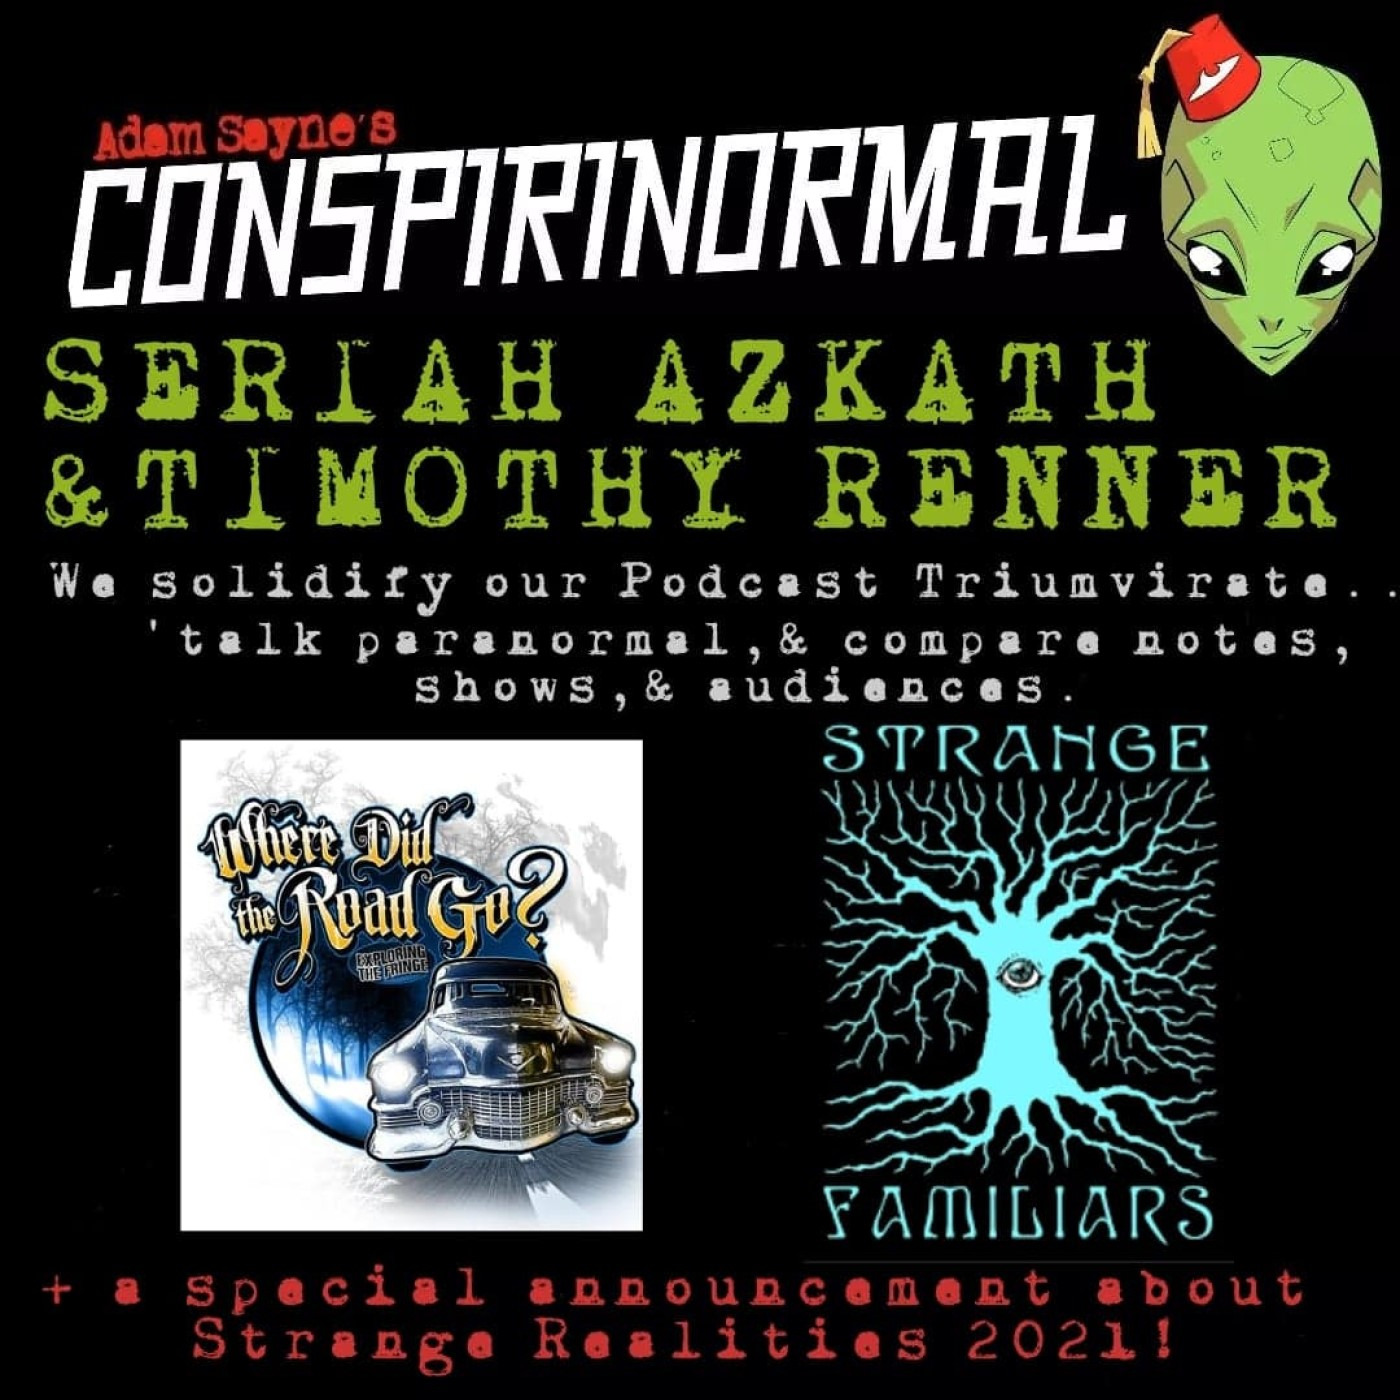 Conspirinormal 357- Seriah Azkath and Timothy Renner (Where did the Strange Familiars Go?)